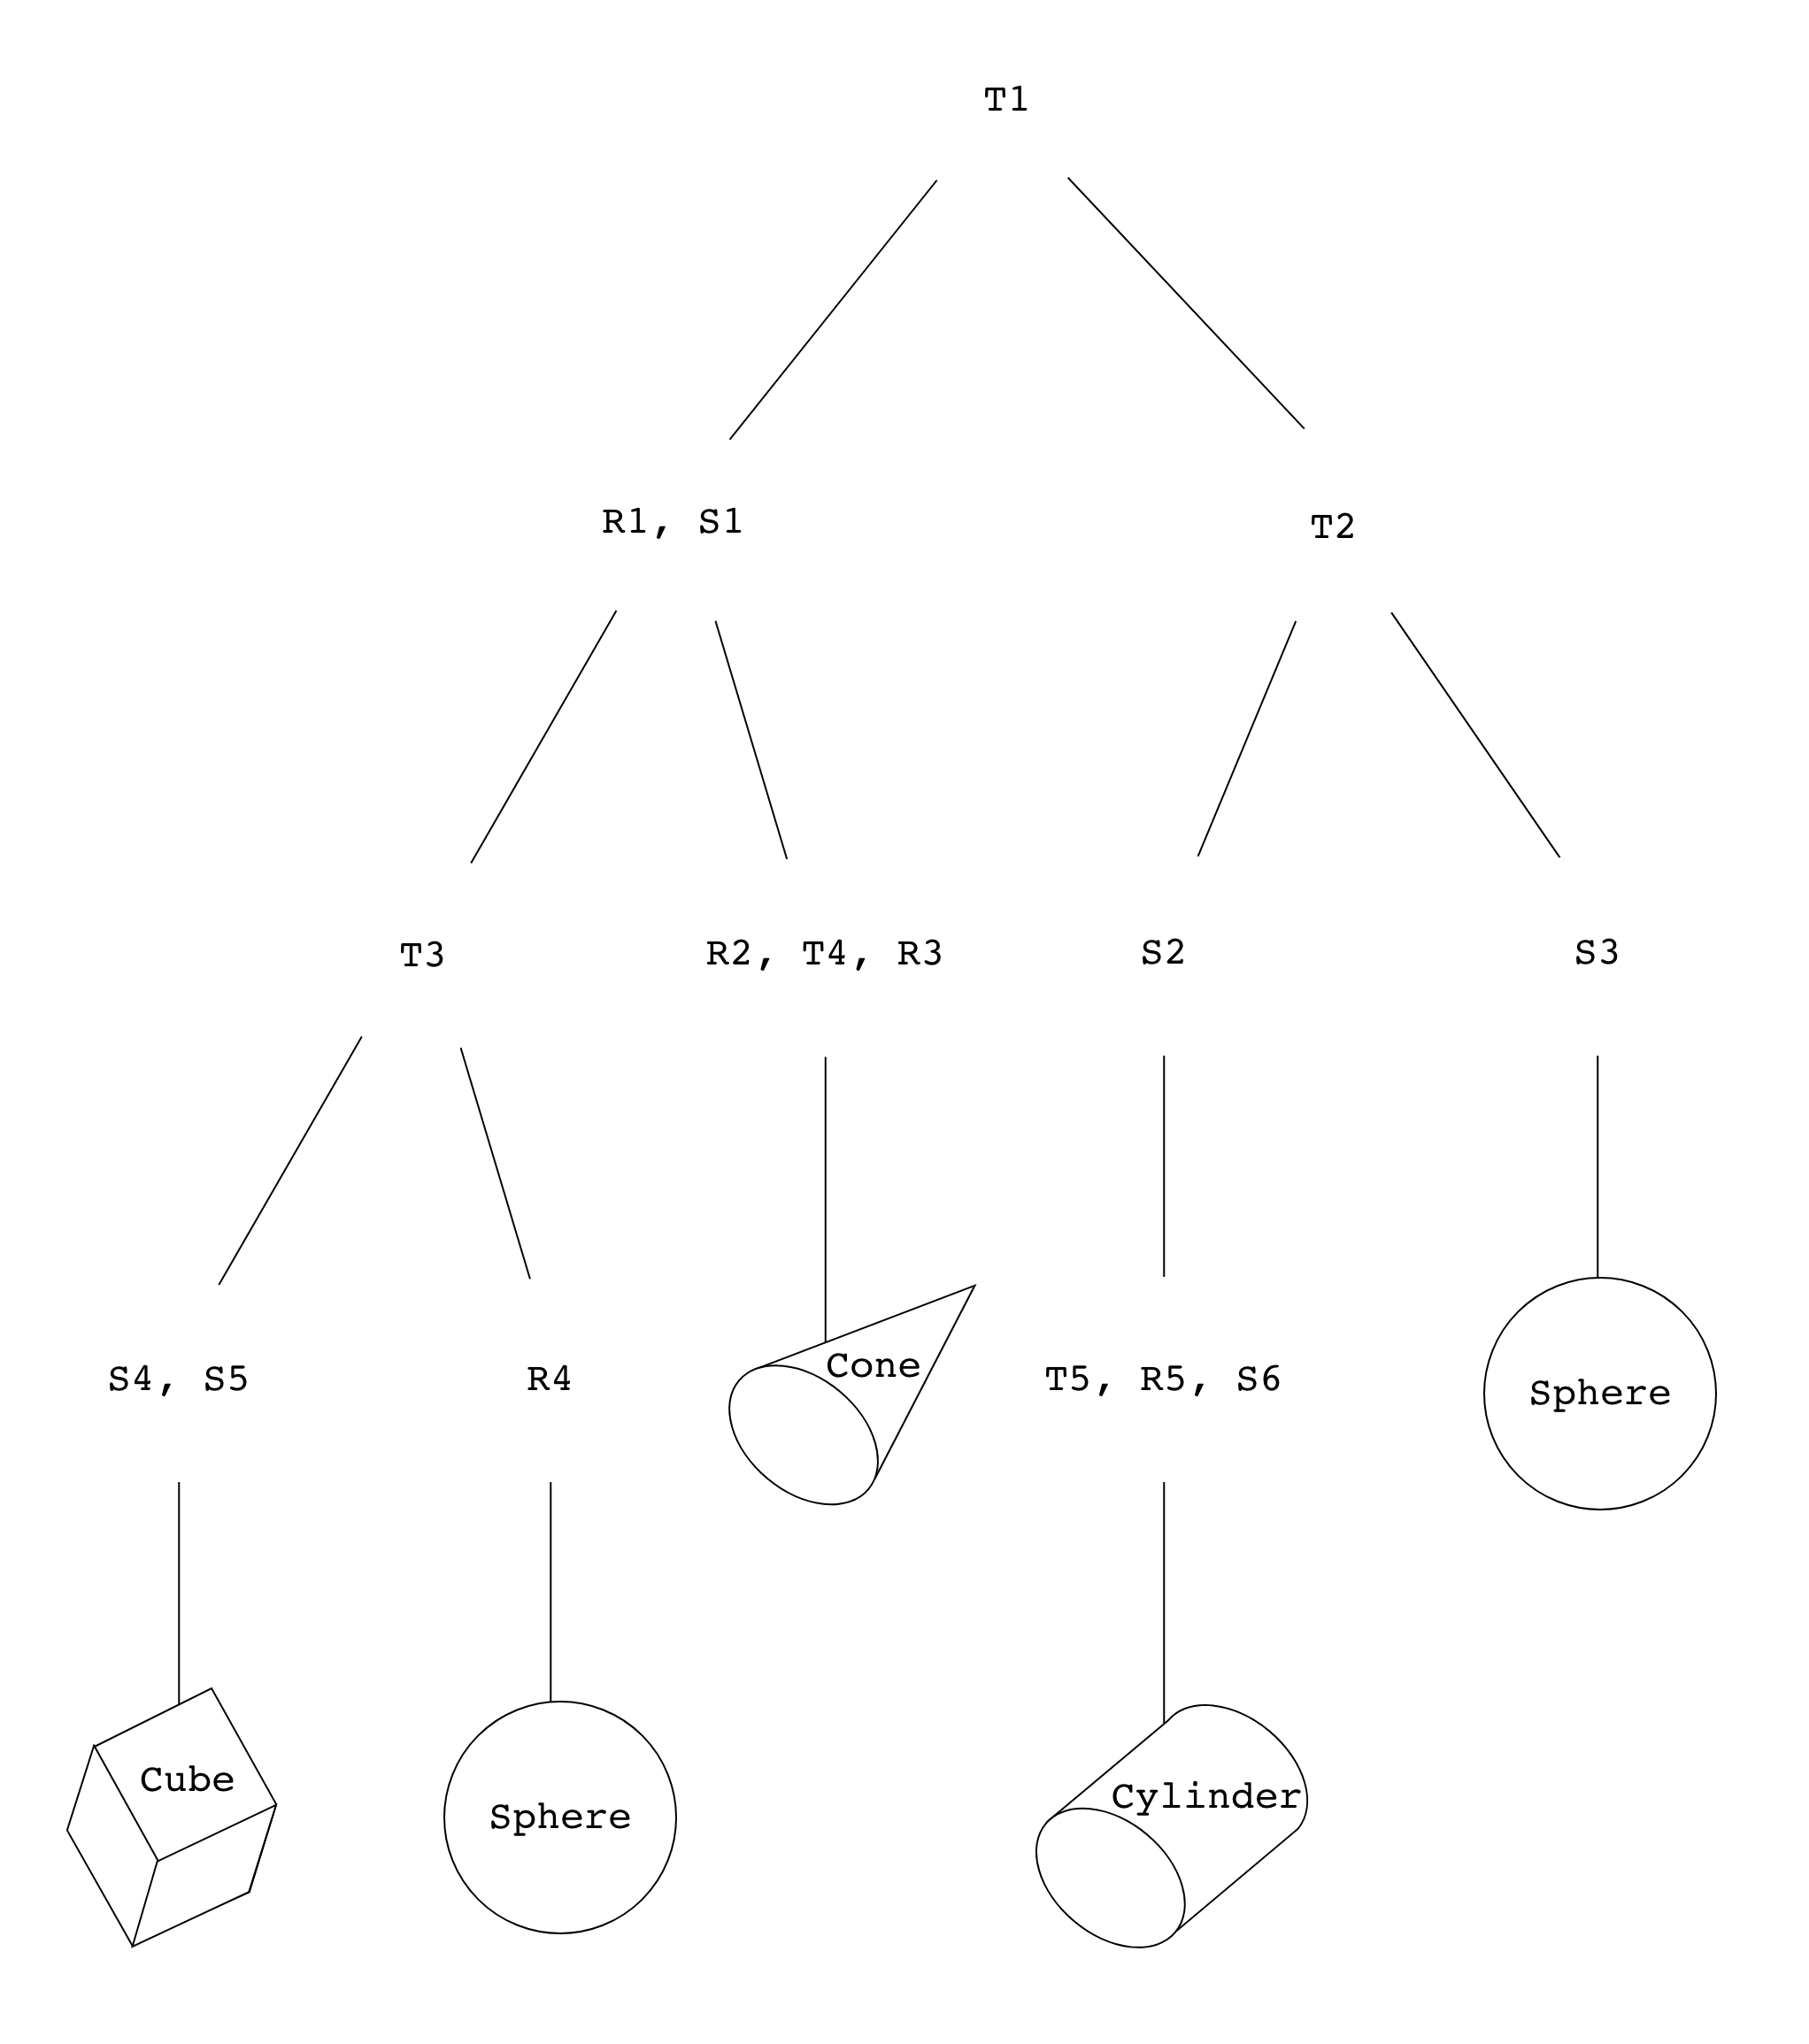 Scene graph with five primitives